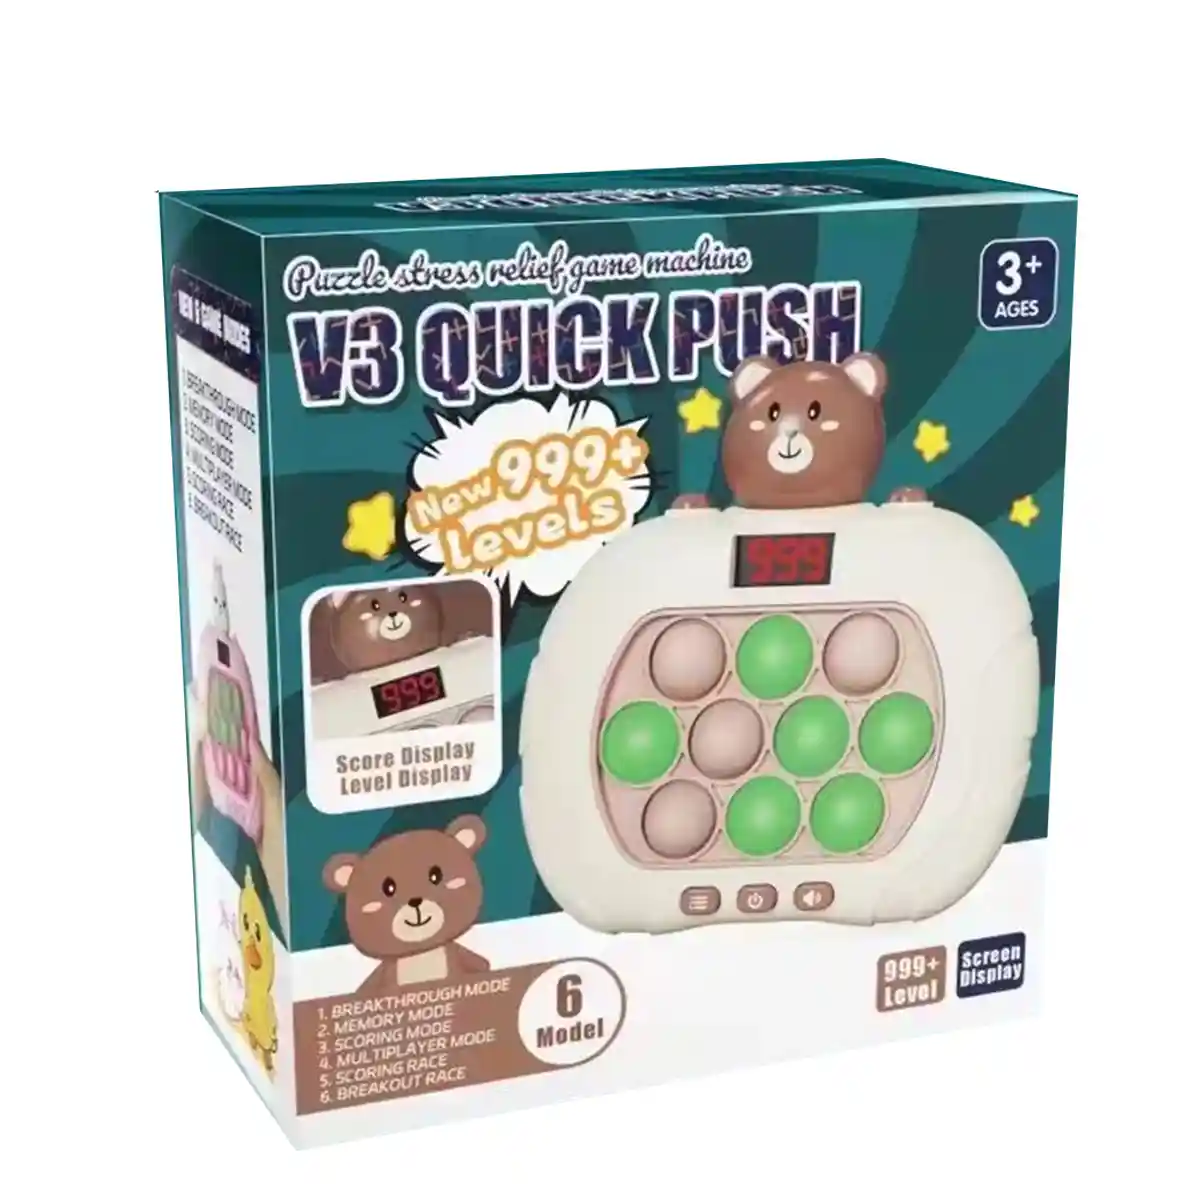 V3 QUICK PUSH POP IT GAME MACHINE ( GH-002 ) 3YRS+ - Kiddy Zone